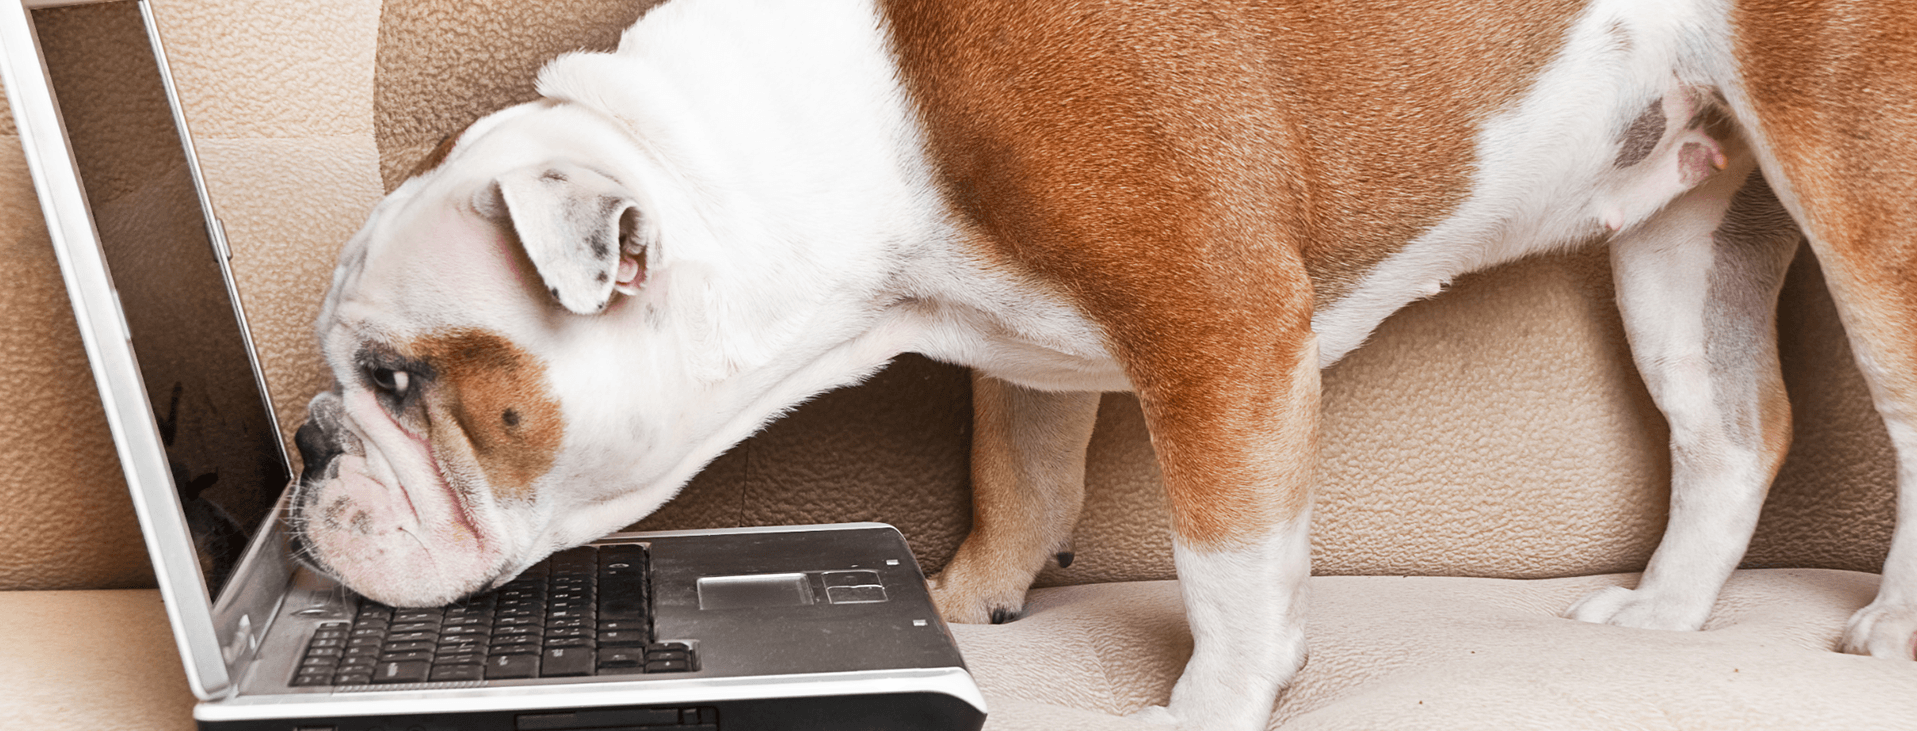 Bulldog standing on a sofa investigating an open laptop computer. 